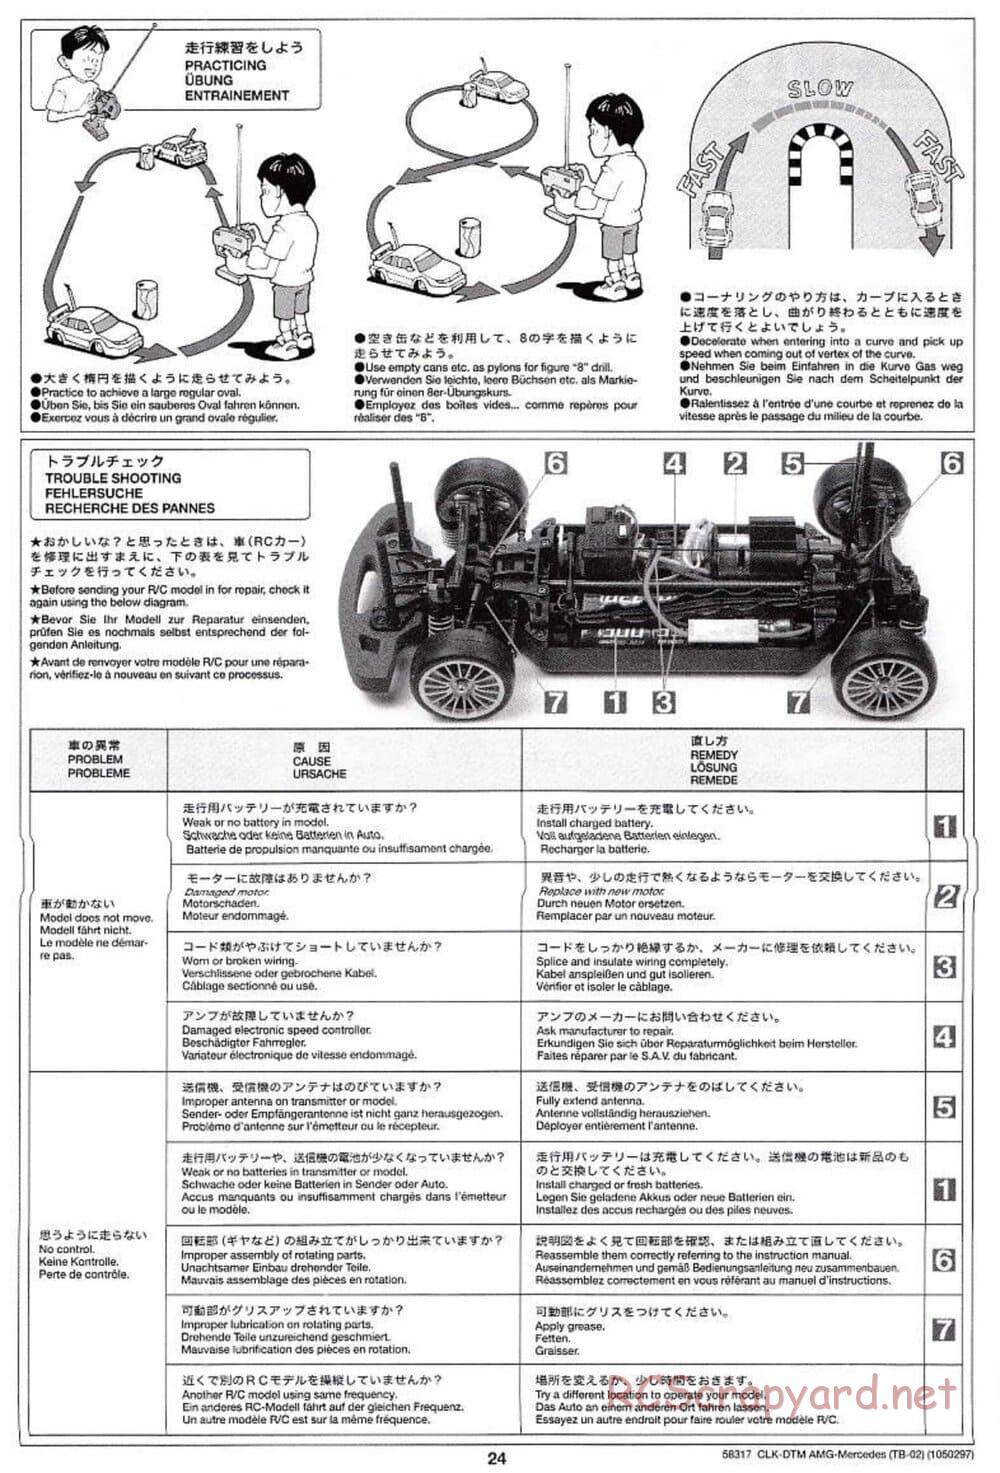 Tamiya - CLK DTM 2002 AMG Mercedes - TB-02 Chassis - Manual - Page 24